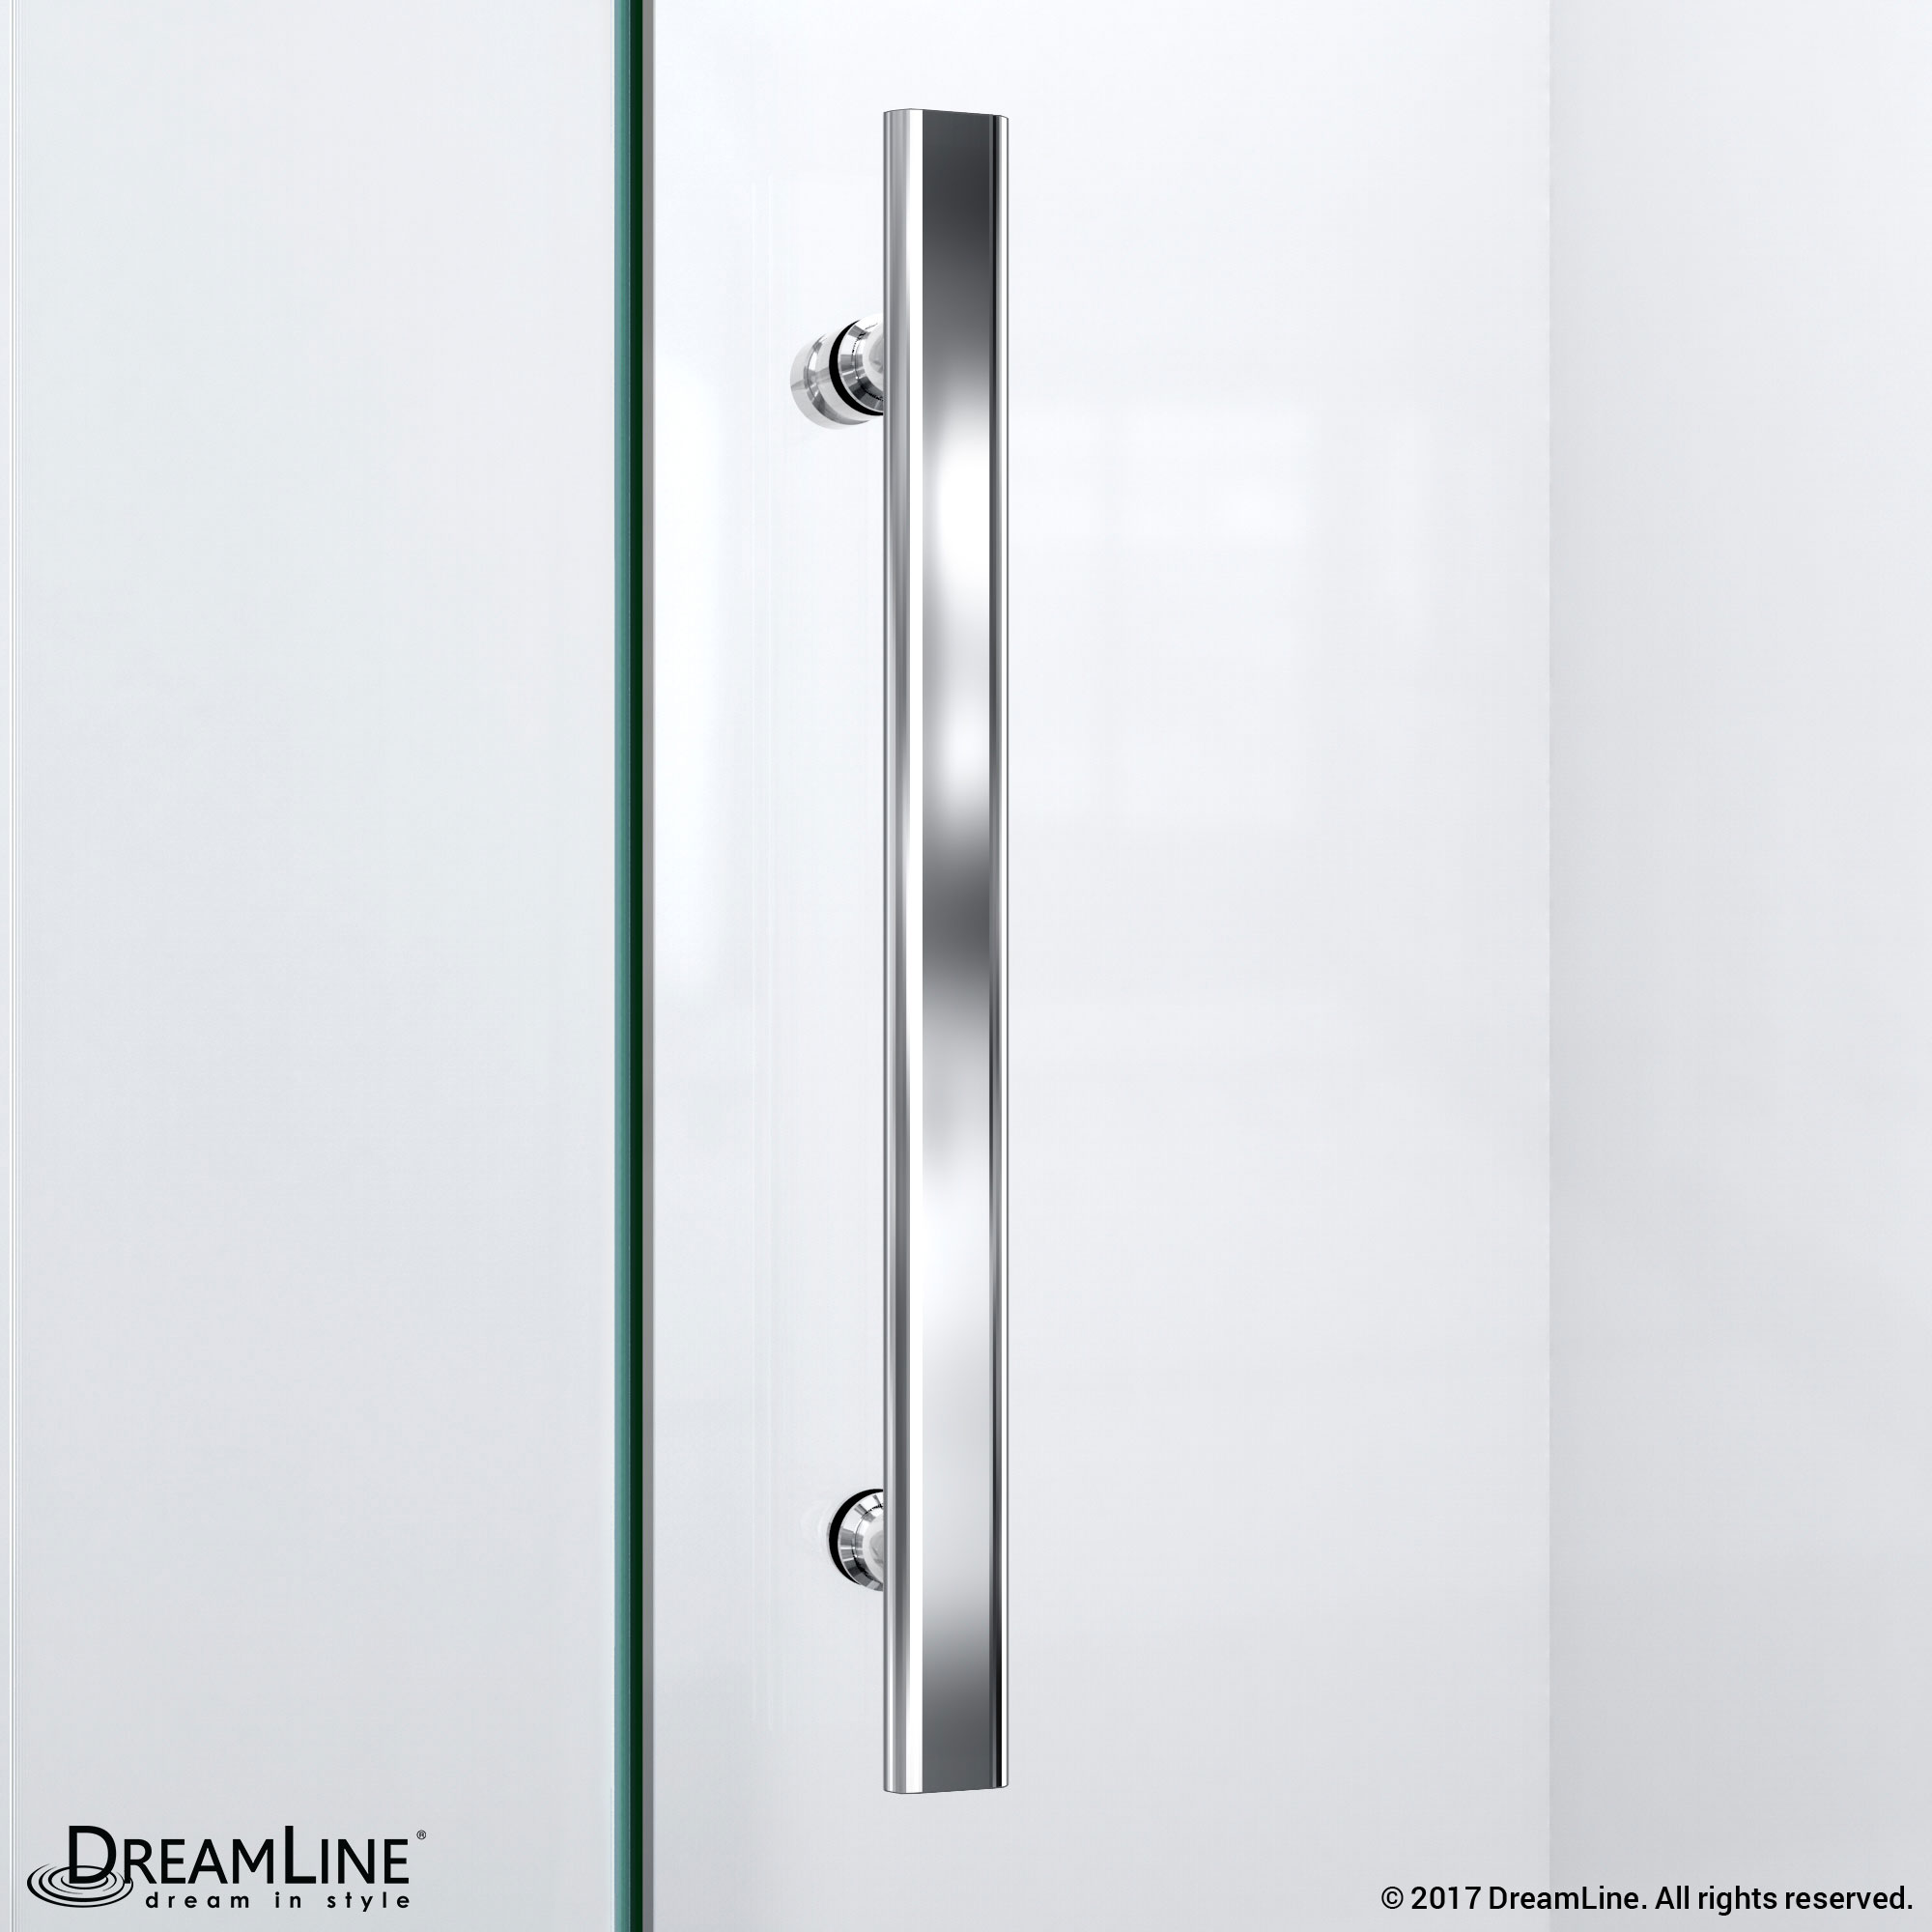 PrismLux 34-5/16" x 34-5/16" Frameless Hinged Shower Enclosure, Clear 3/8" Glass Shower, Chrome